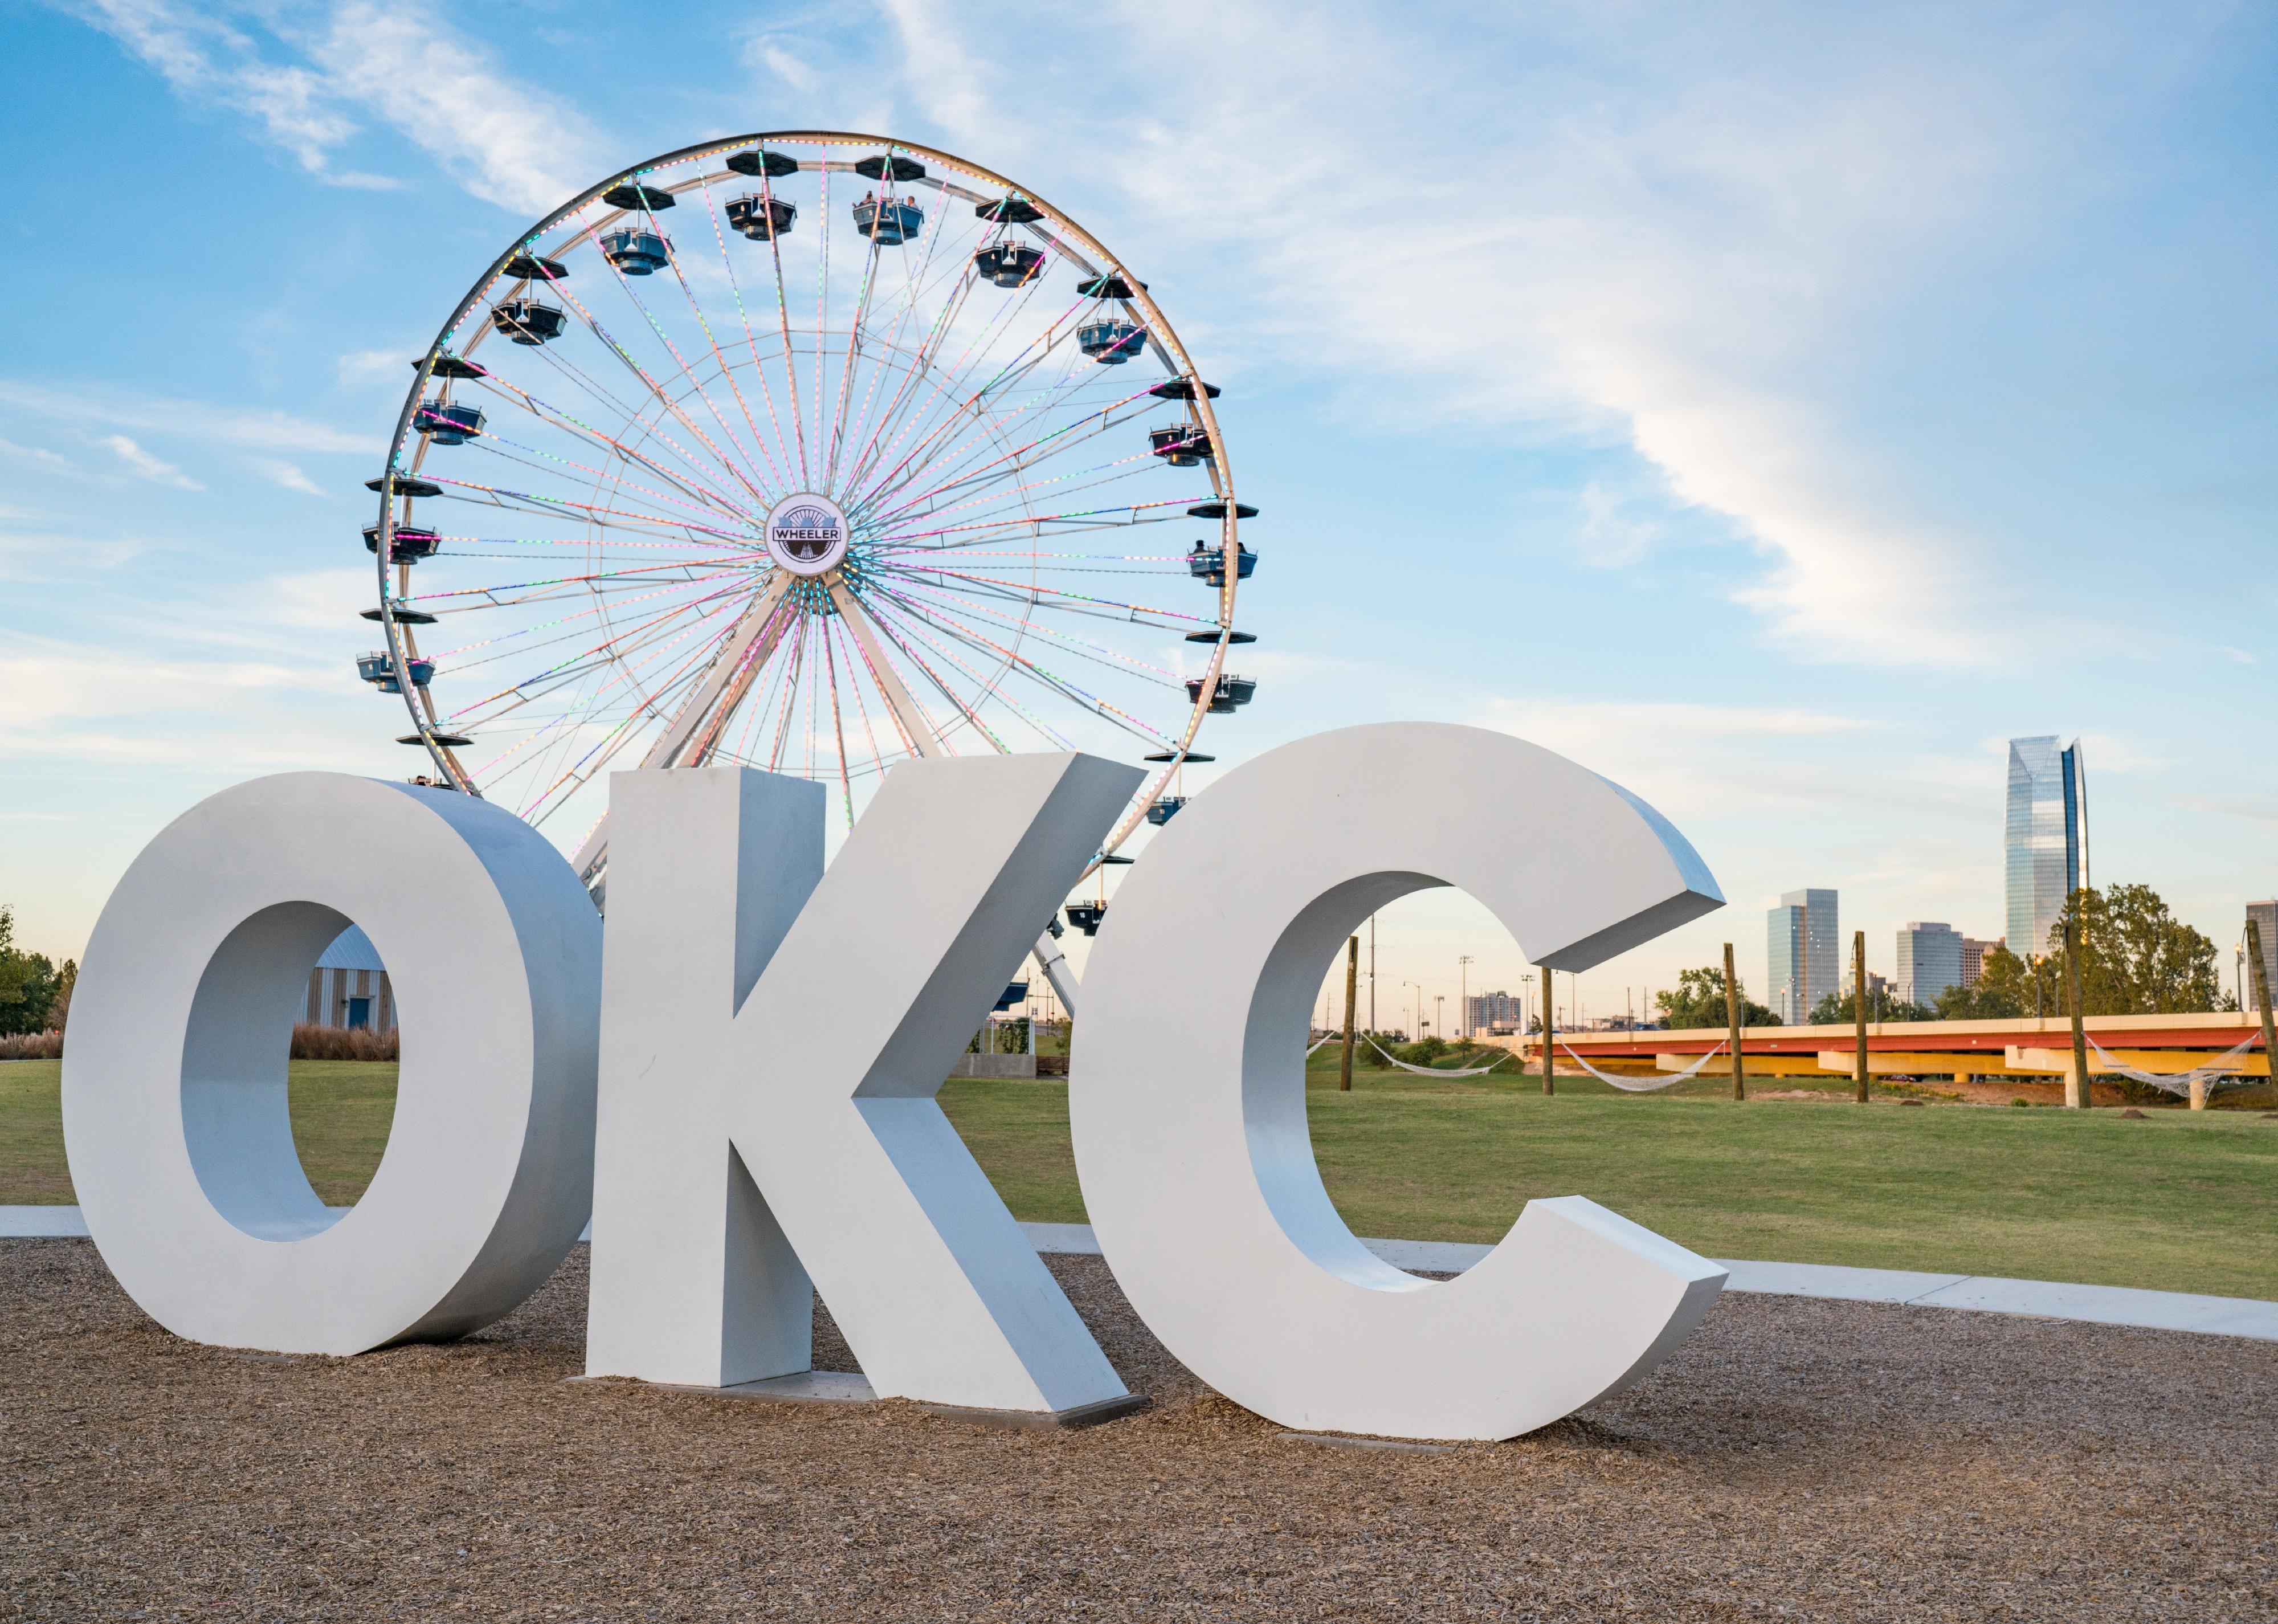 Skyline of Oklahoma City with OKC sign and ferris wheel.